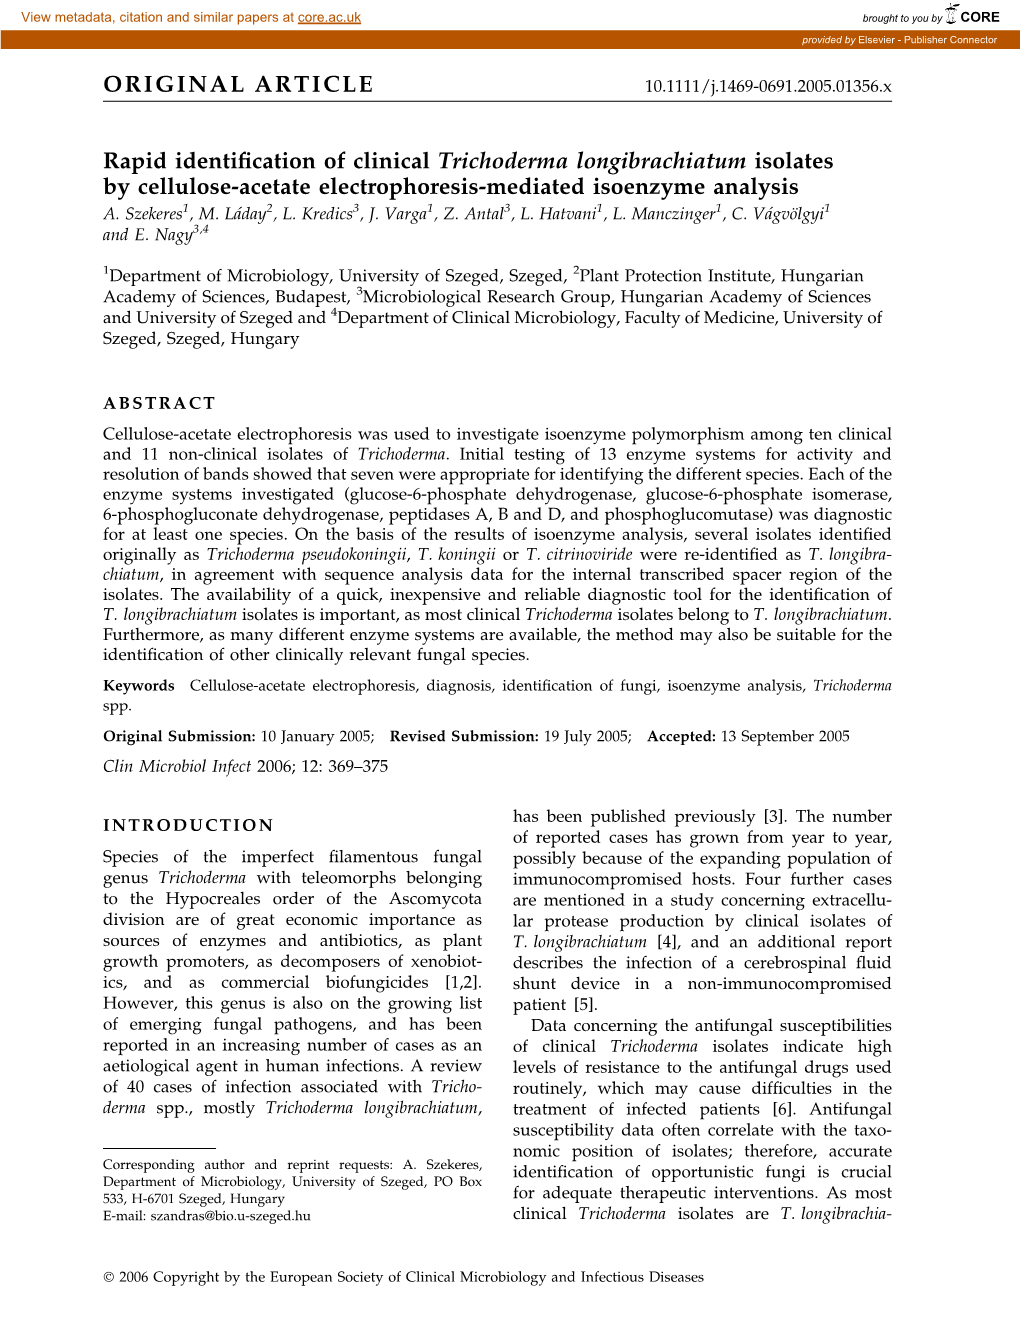 Rapid Identification of Clinical Trichoderma Longibrachiatum